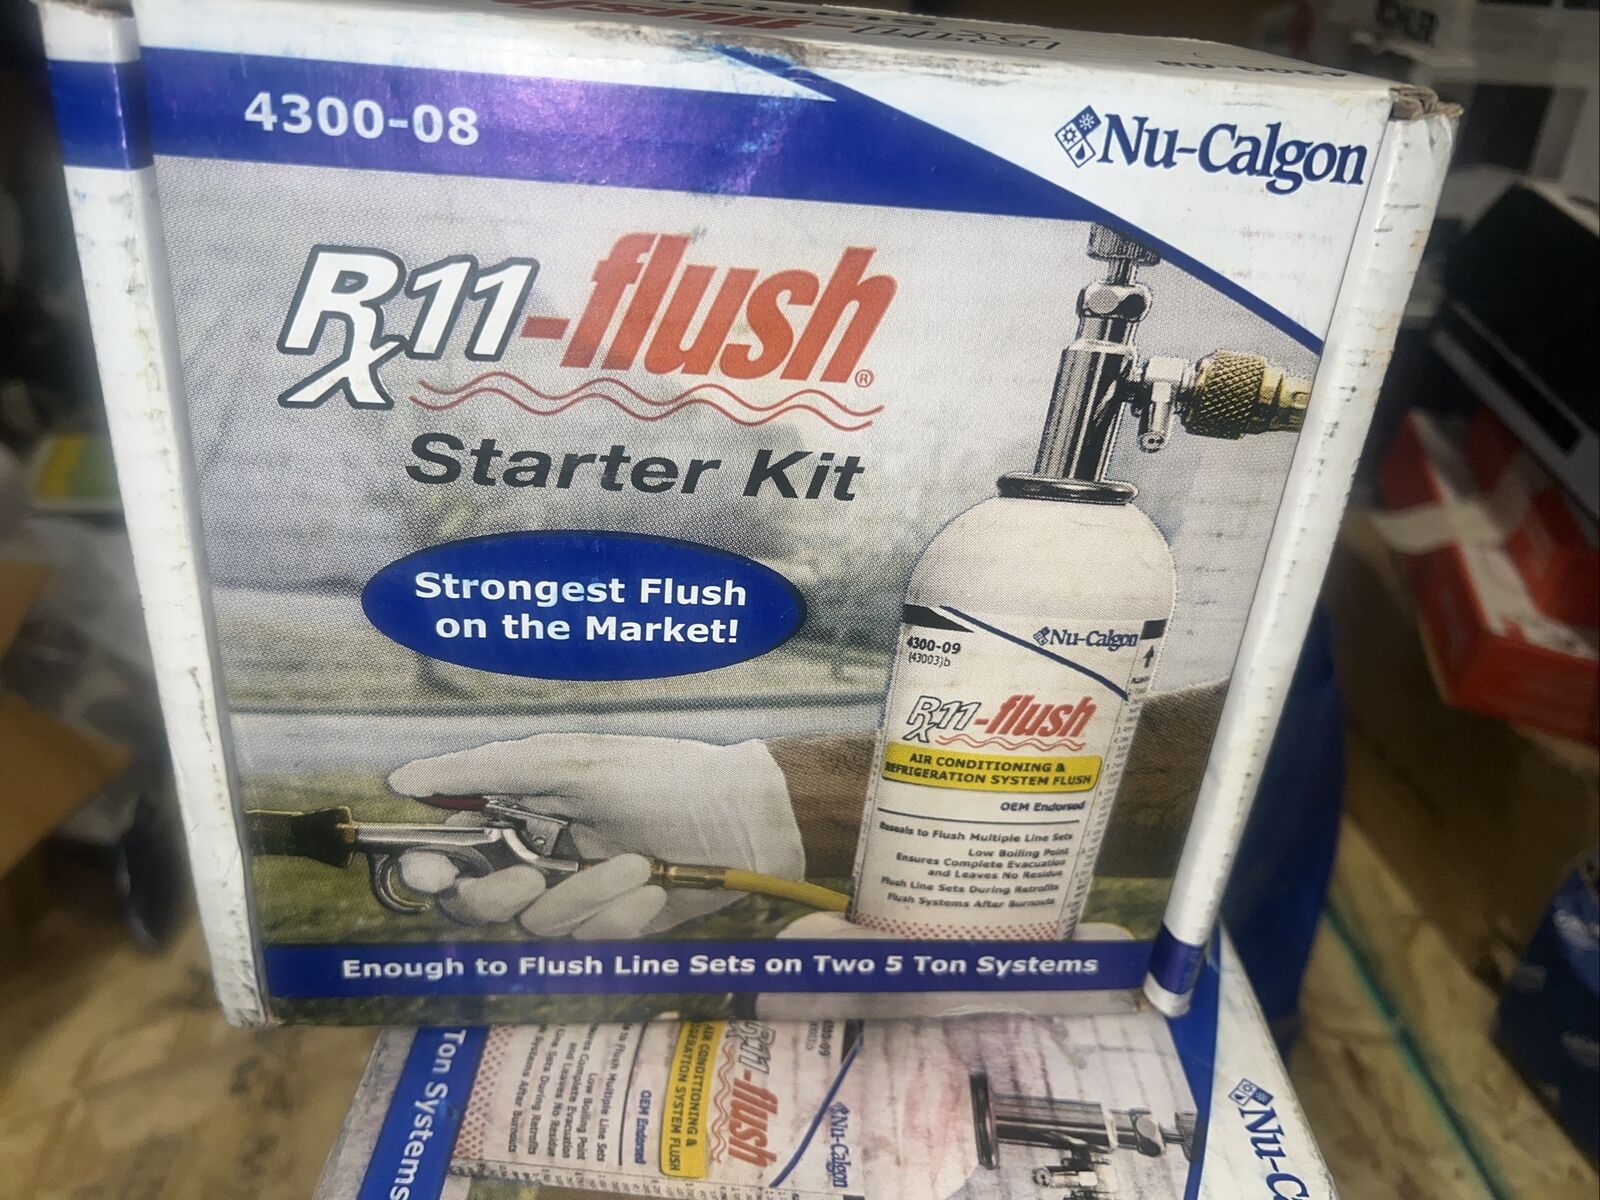 Nu-Calgon 4300-08 Rx11-flush Starter Kit, AC/R System Flush